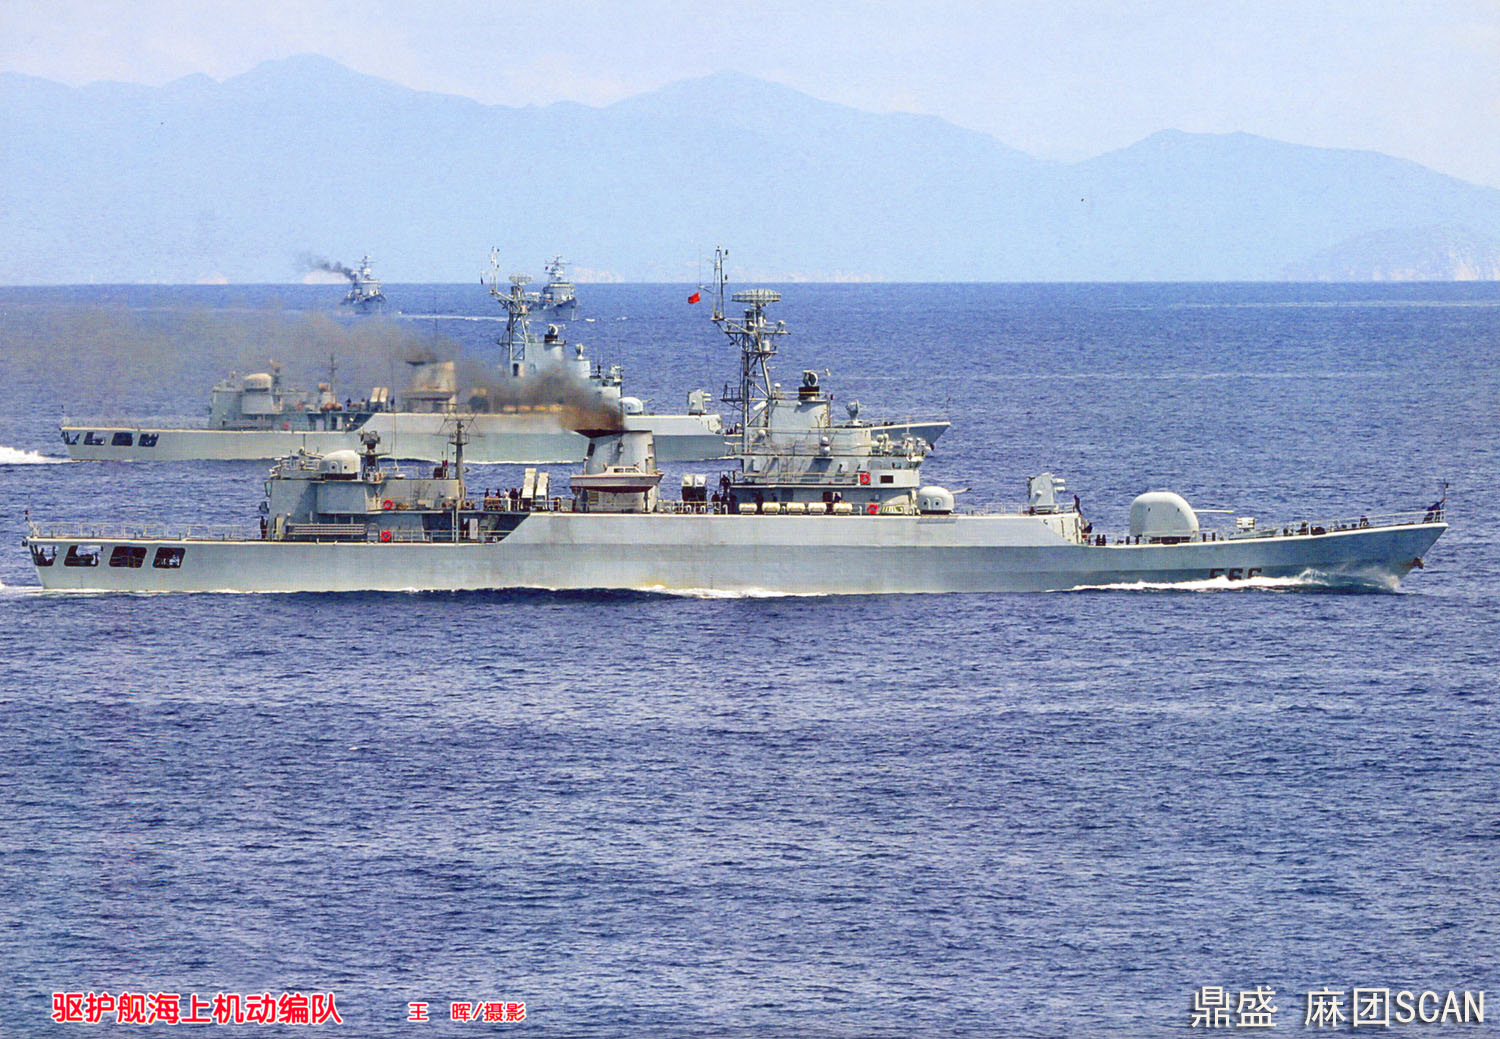 Type 053H3 frigate